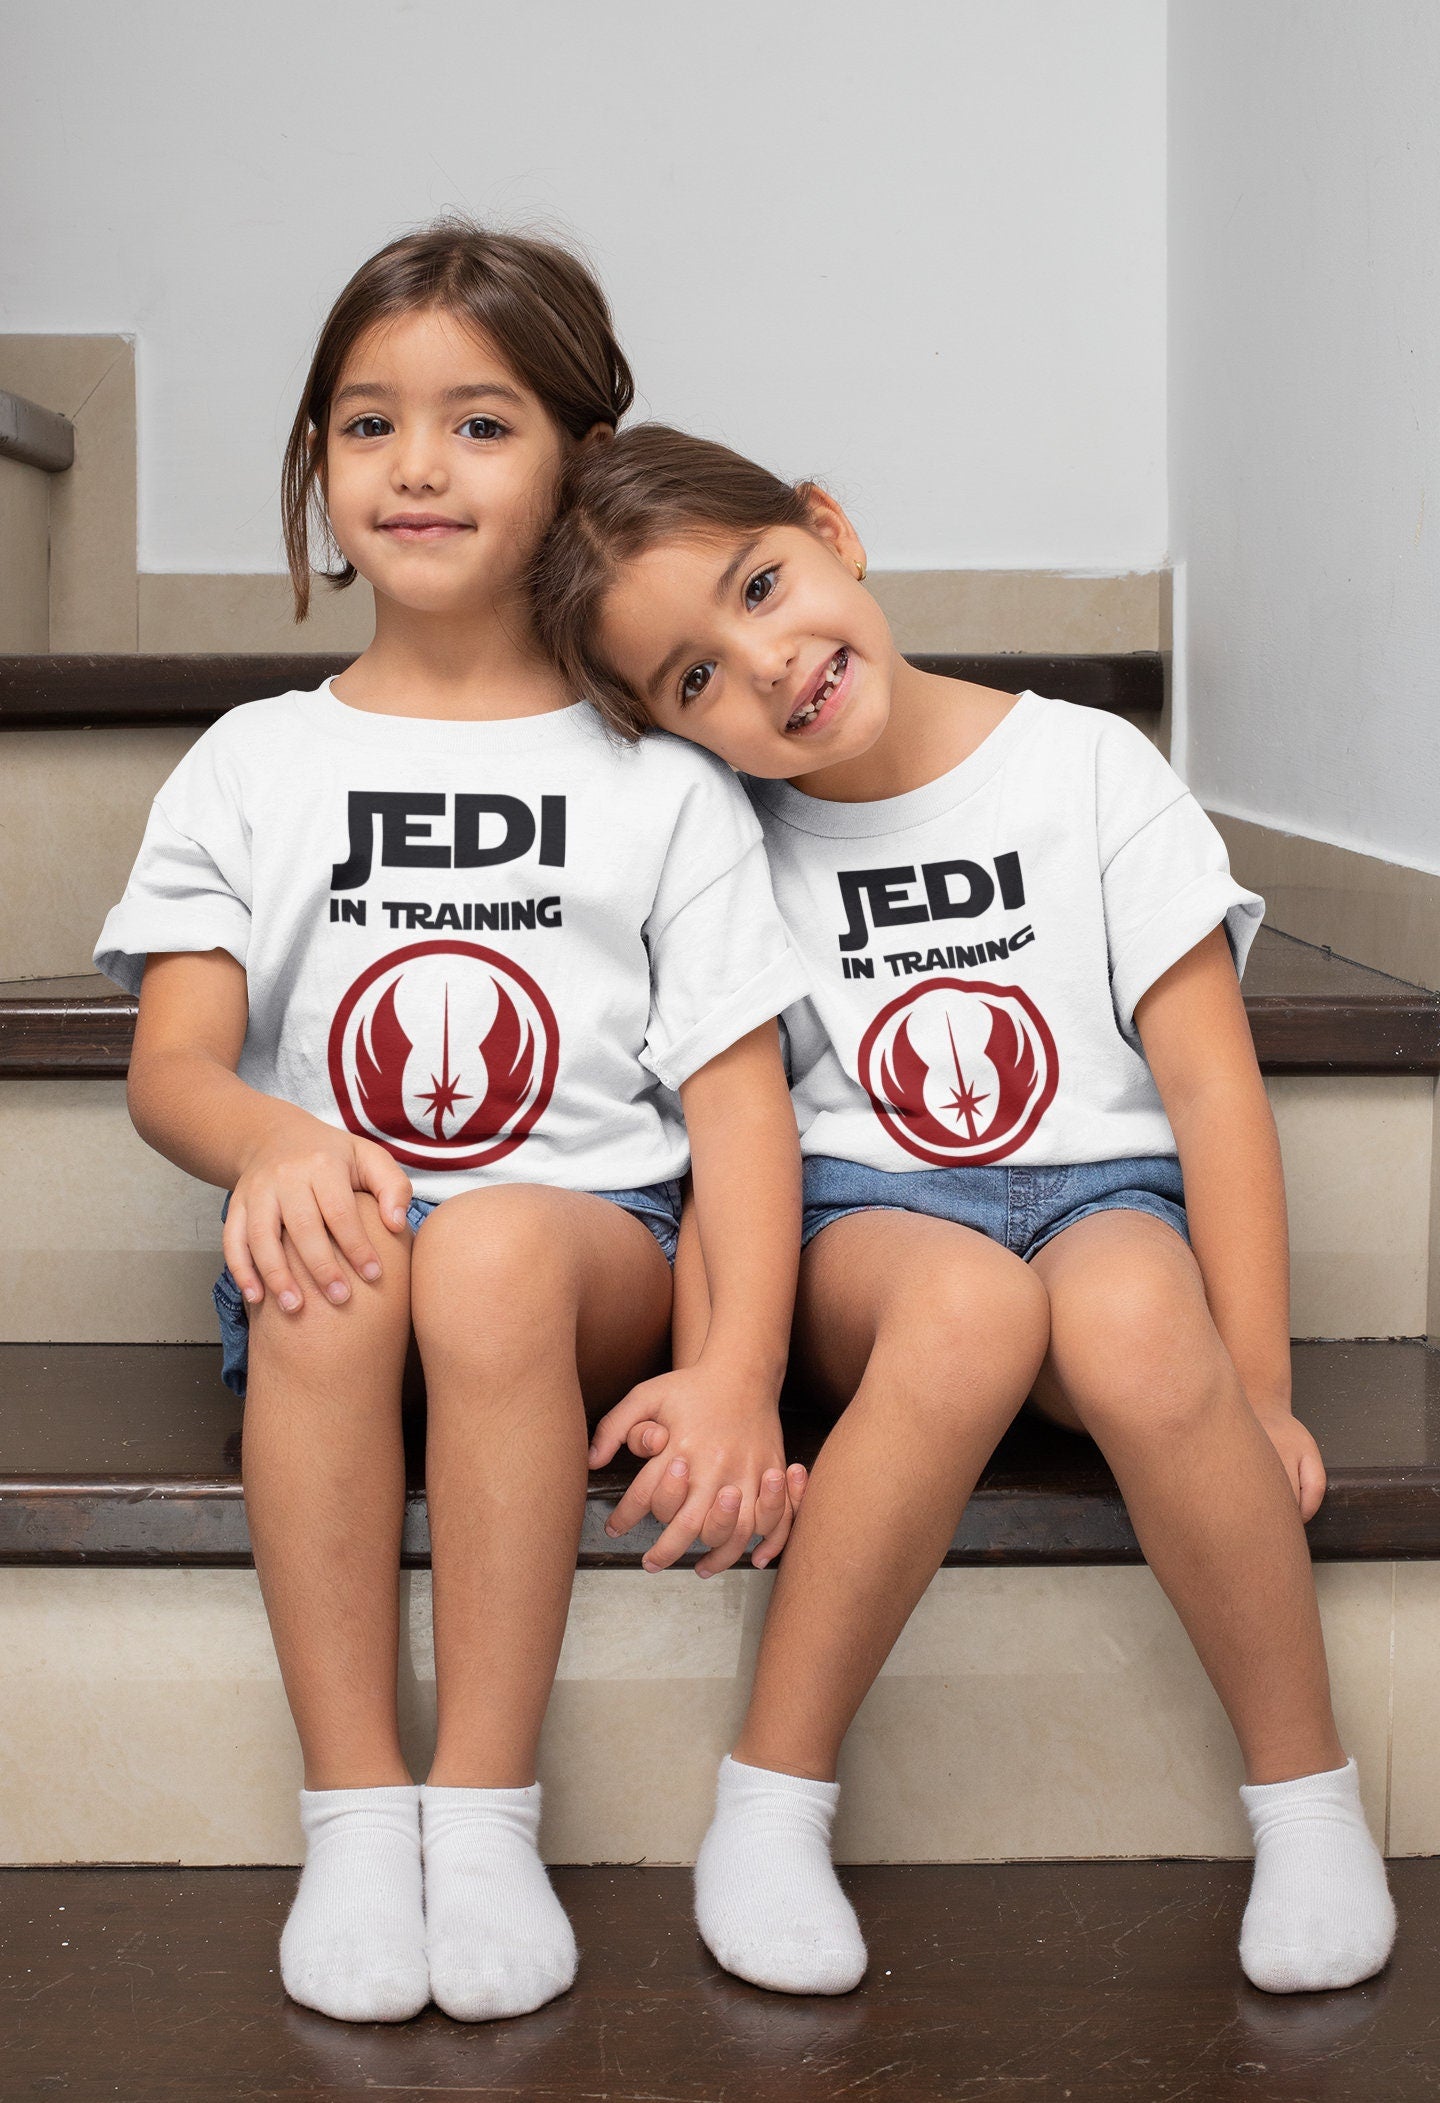 Youth Girls & Boys-Jedi In Training Shirt, Disney Vacation Shirt, Jedi Shirt, Youth Boys Girls Shirts, Disney Inspired Shirt